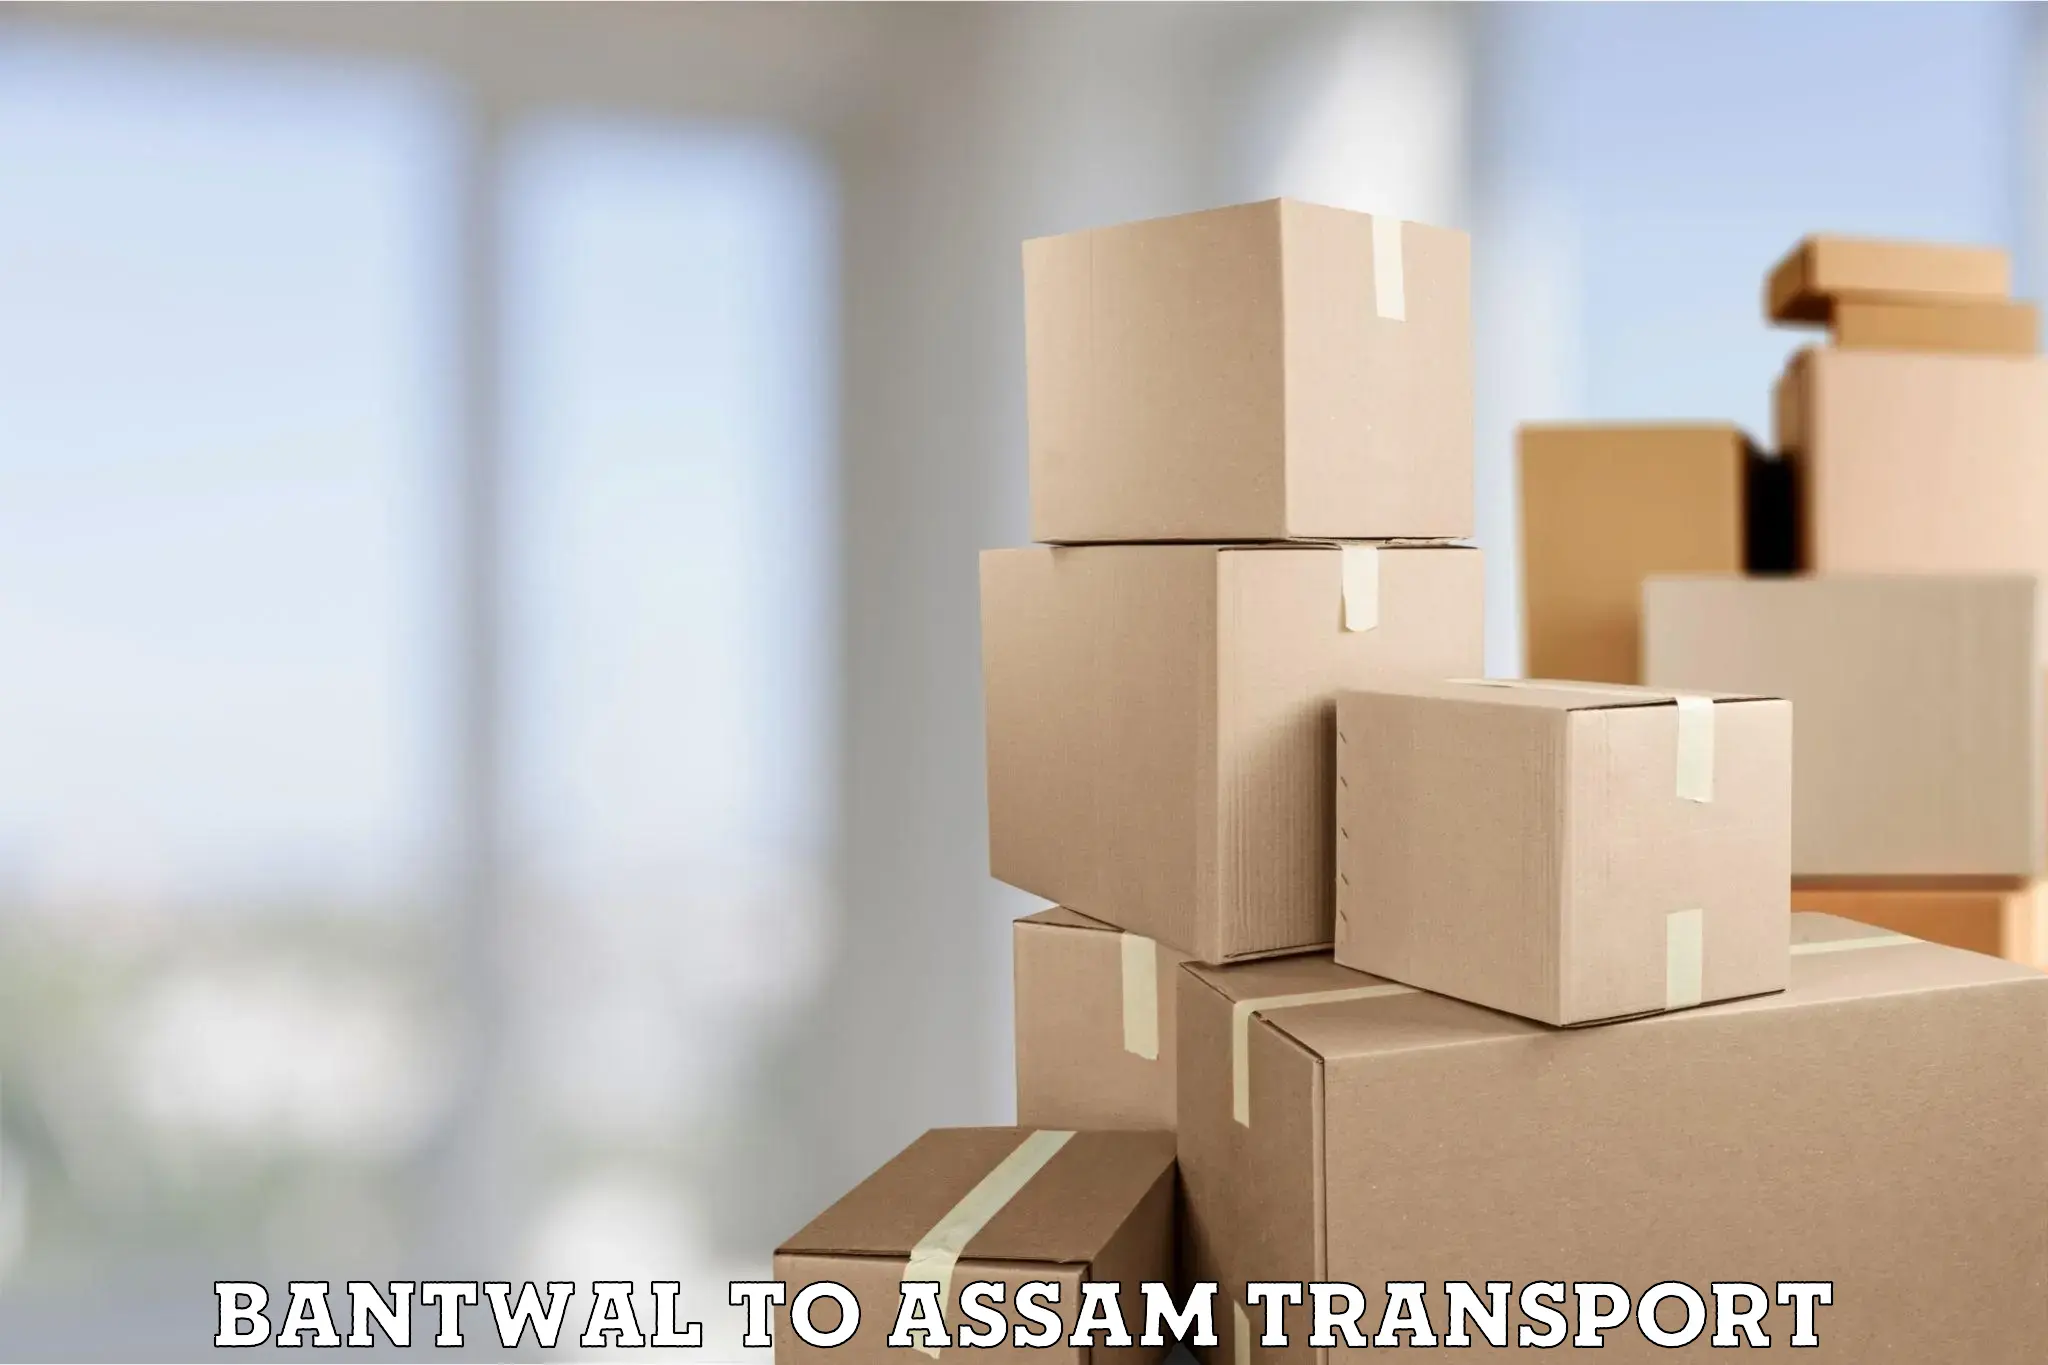 Commercial transport service Bantwal to Sadiya